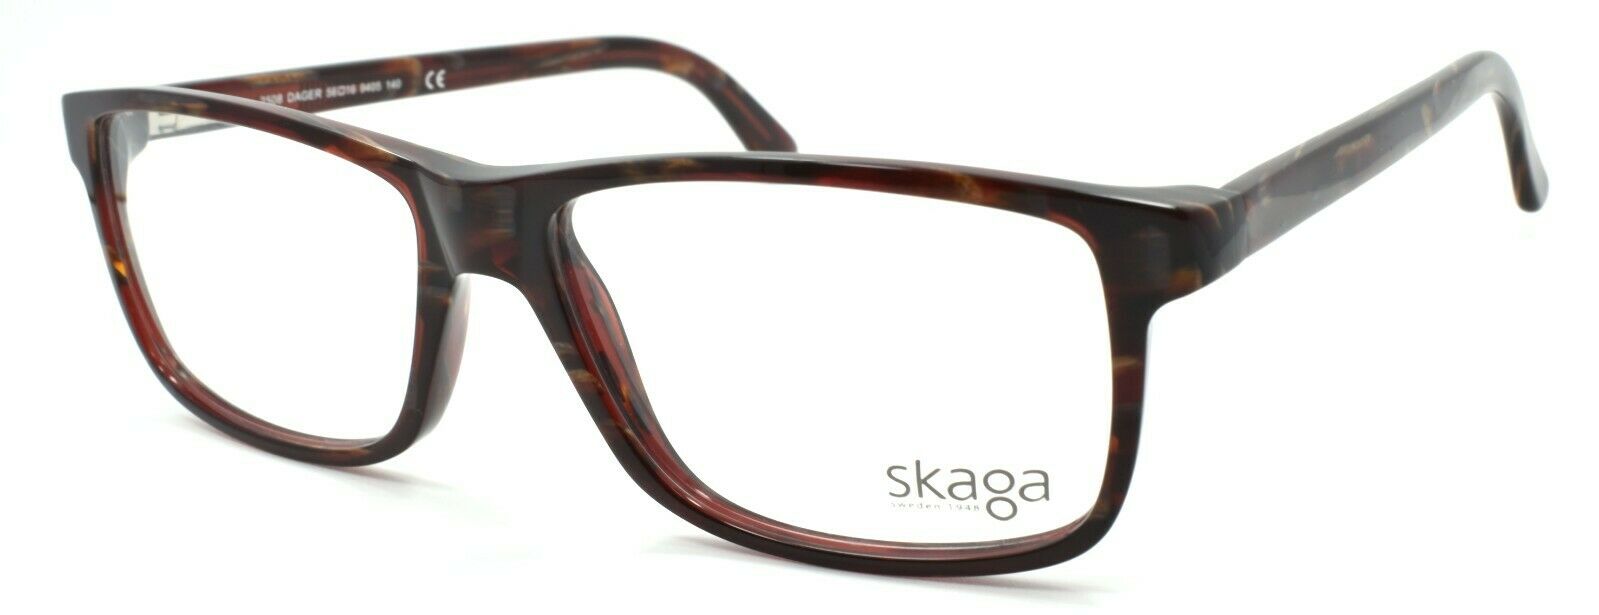 1-Skaga 2508 Dager 9405 Men's Eyeglasses Frames 56-16-140 Brown-IKSpecs